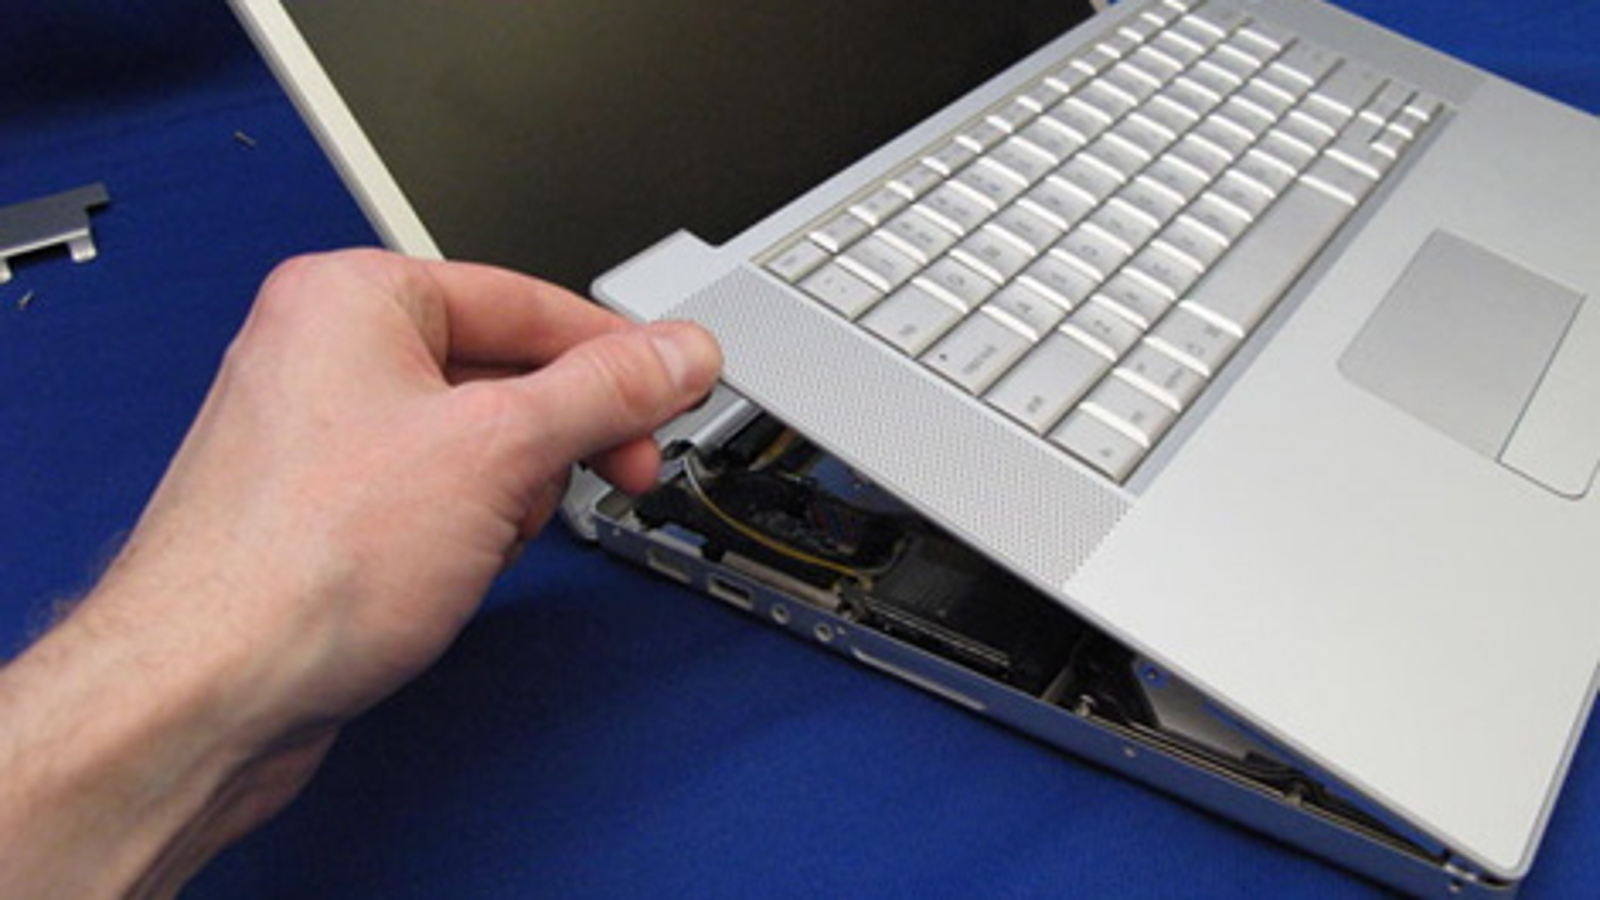 replace macbook pro harddrive